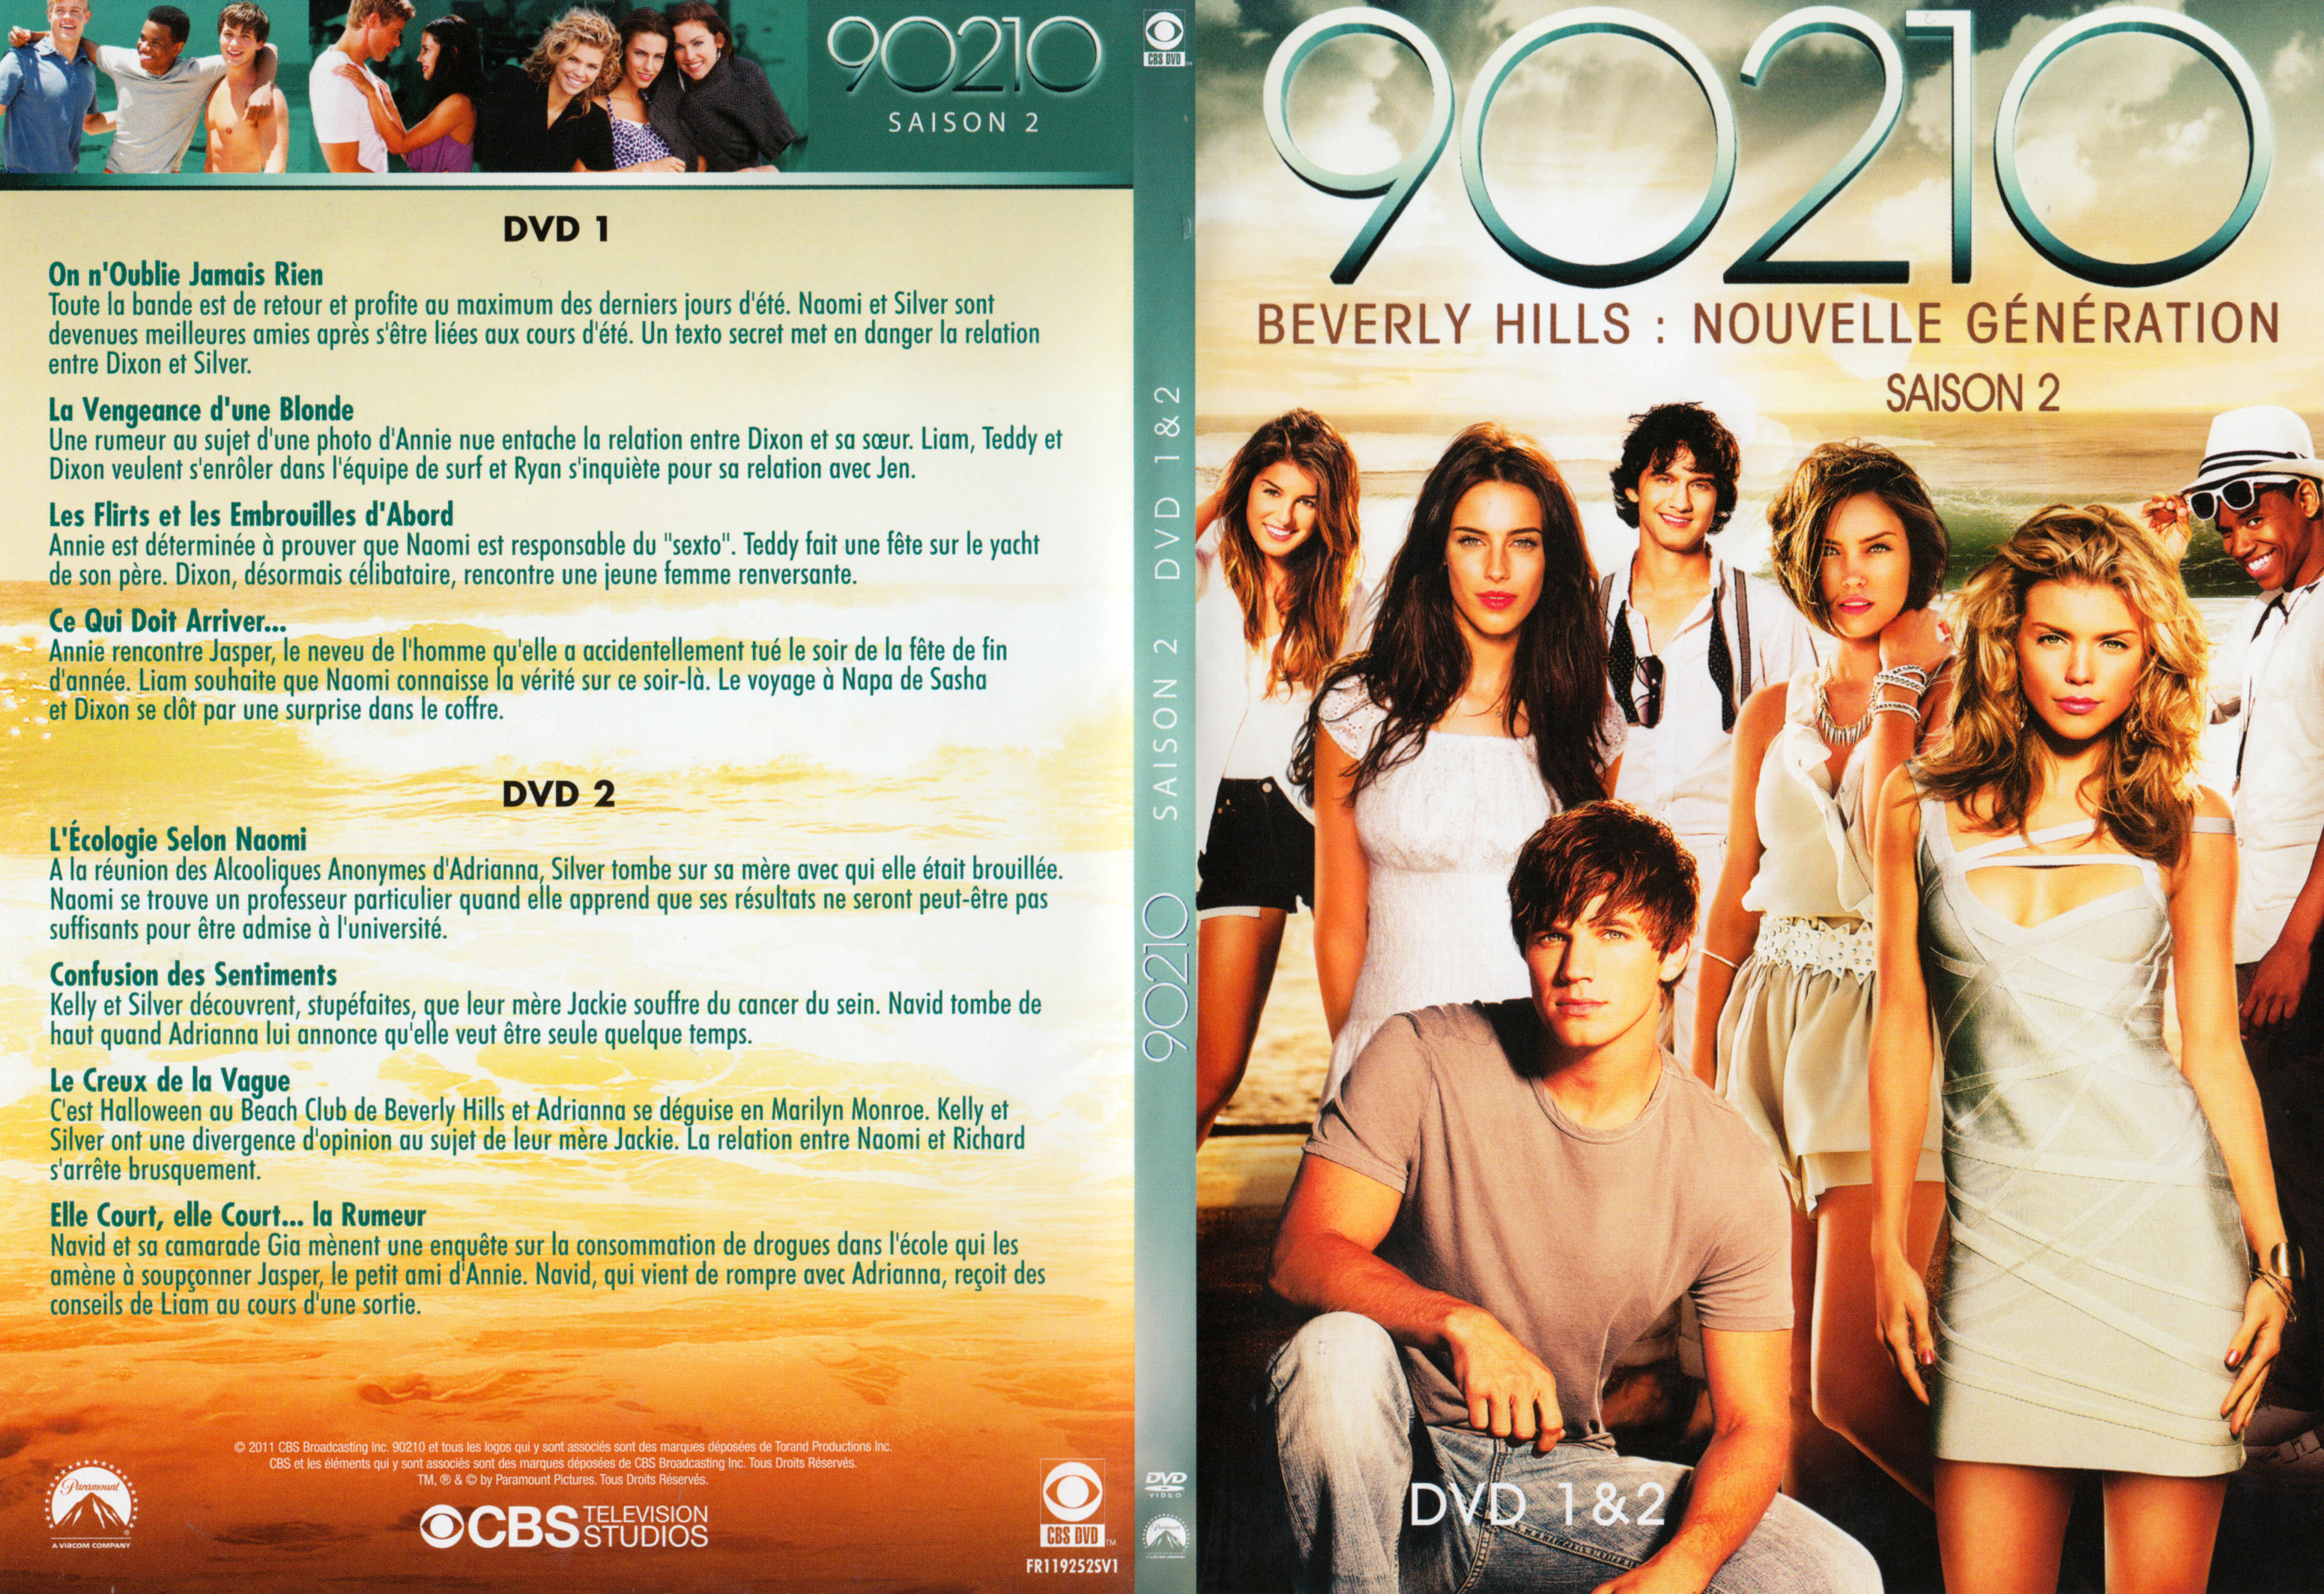 Jaquette DVD 90210 Saison 2 DVD 1